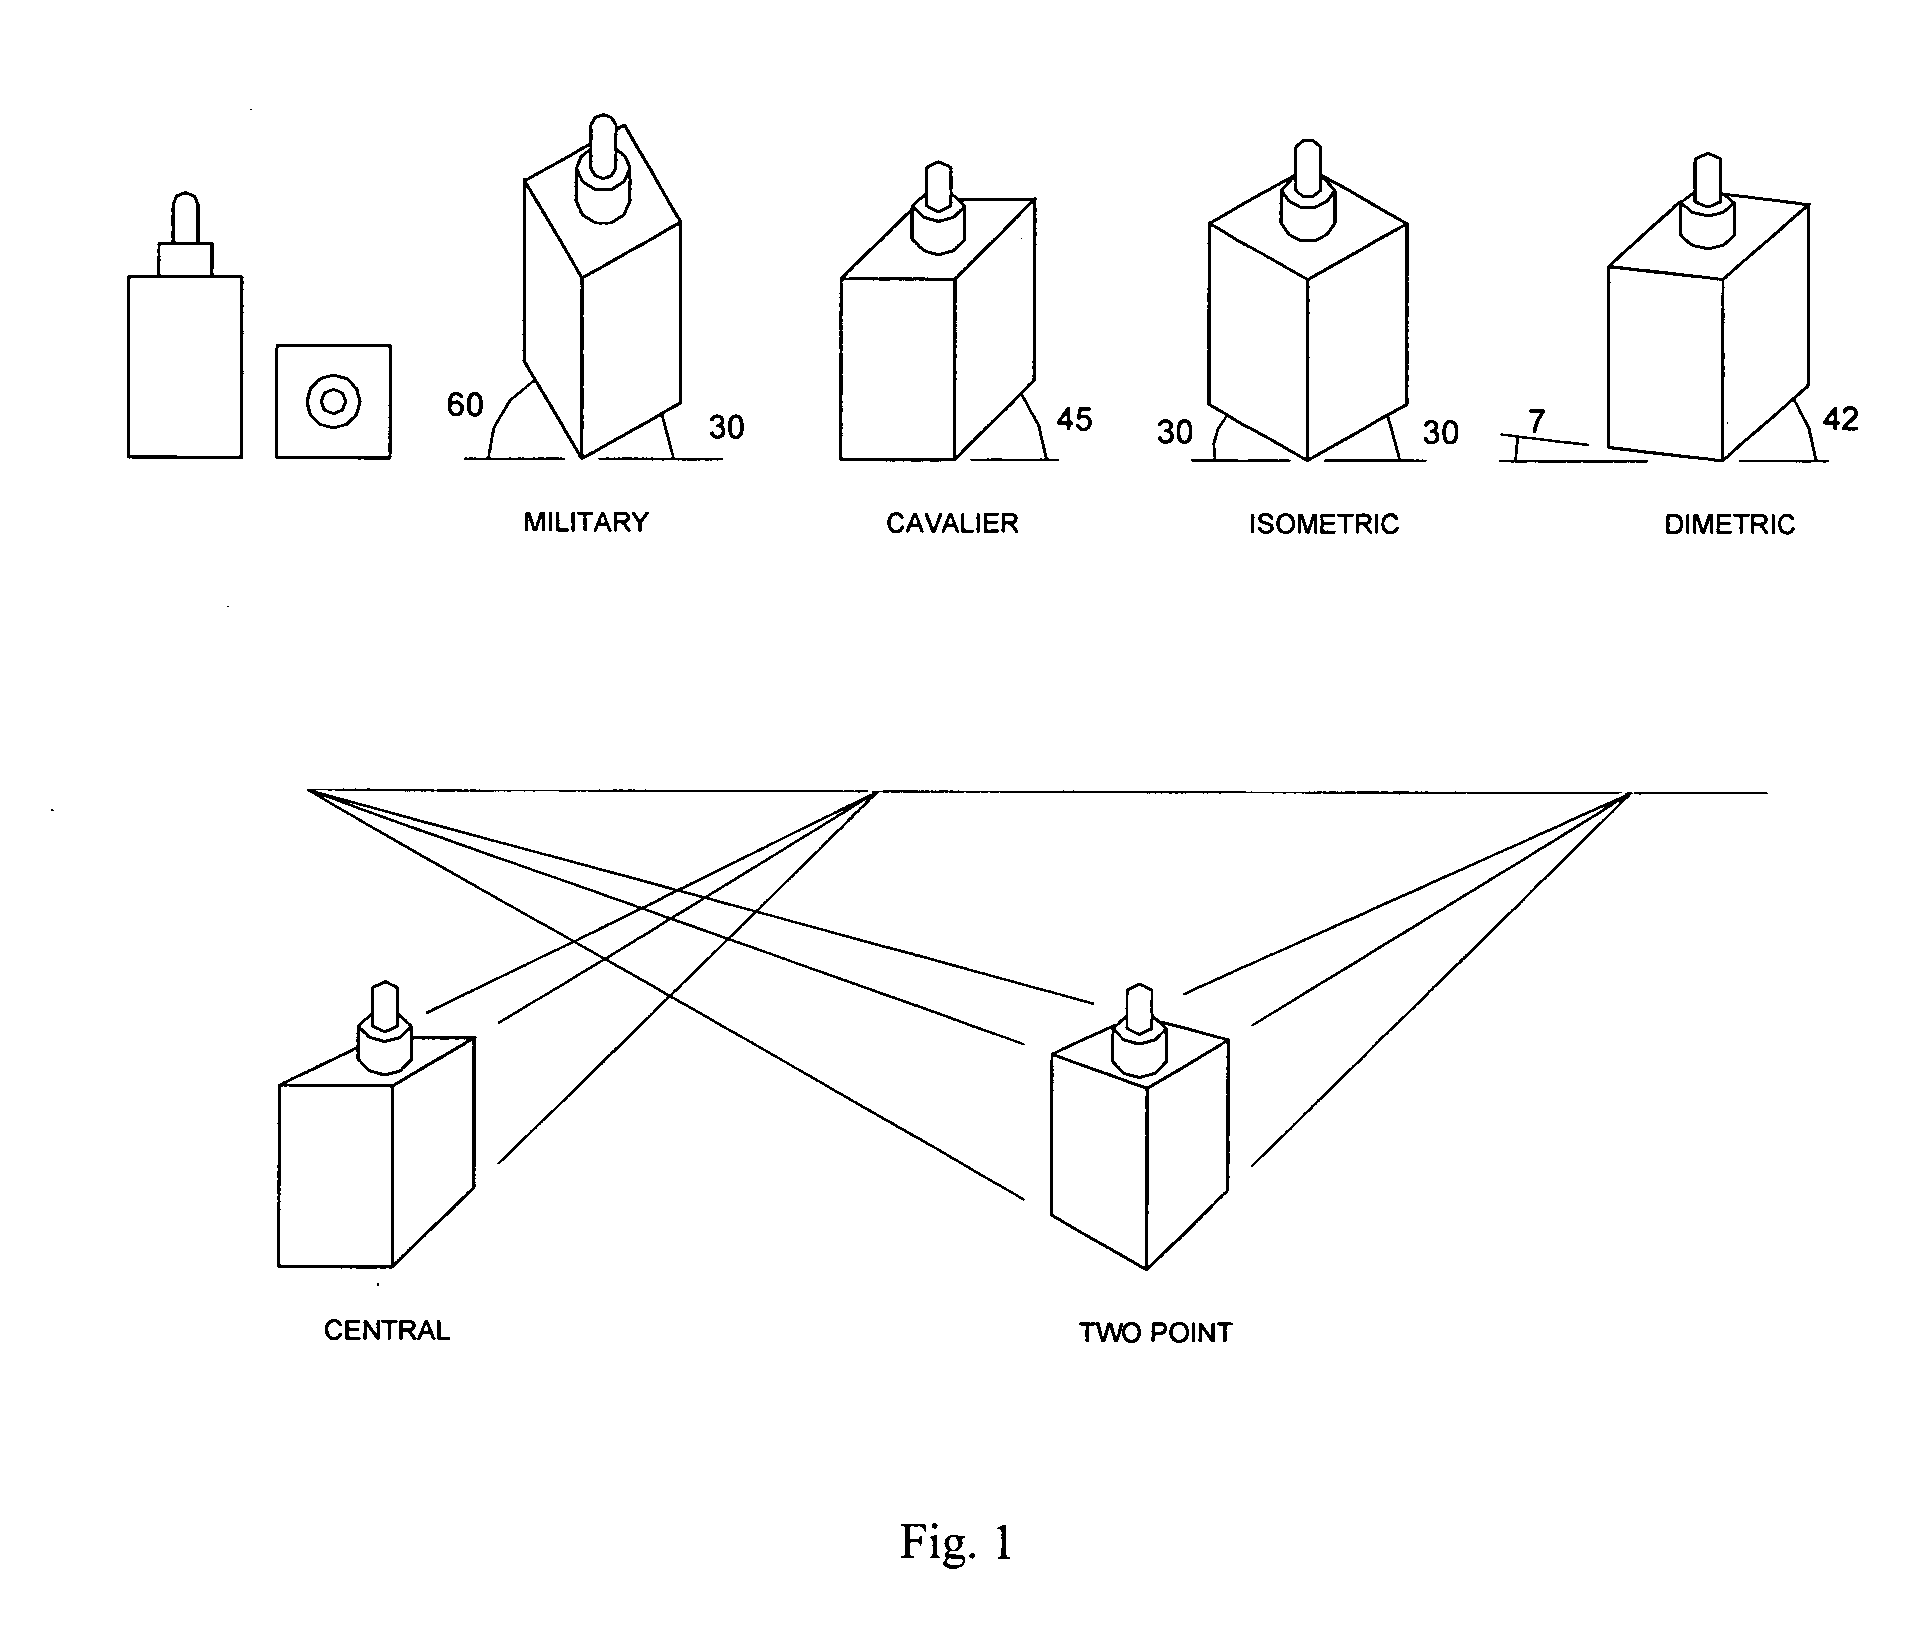 Horizontal perspective representation